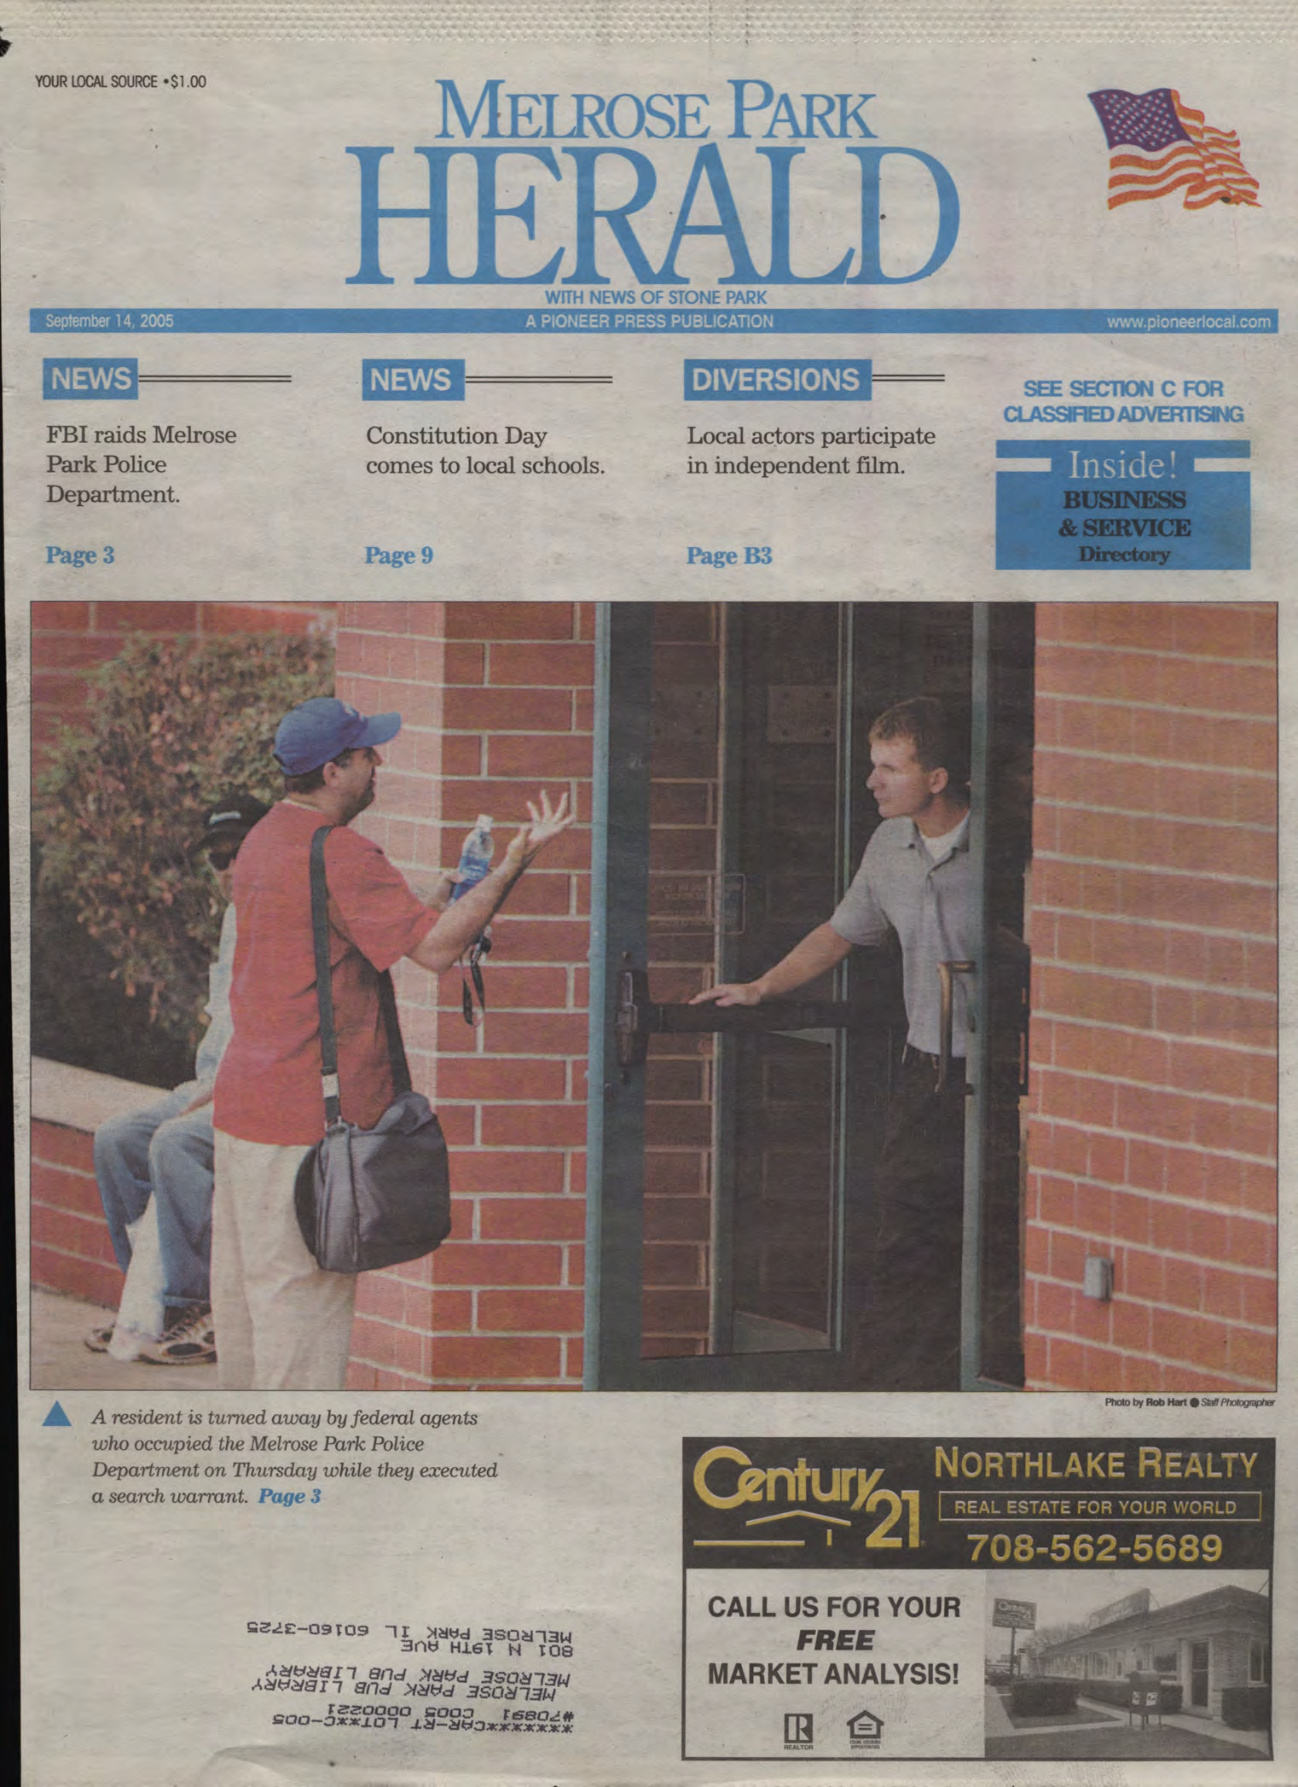 The Herald – 20050914